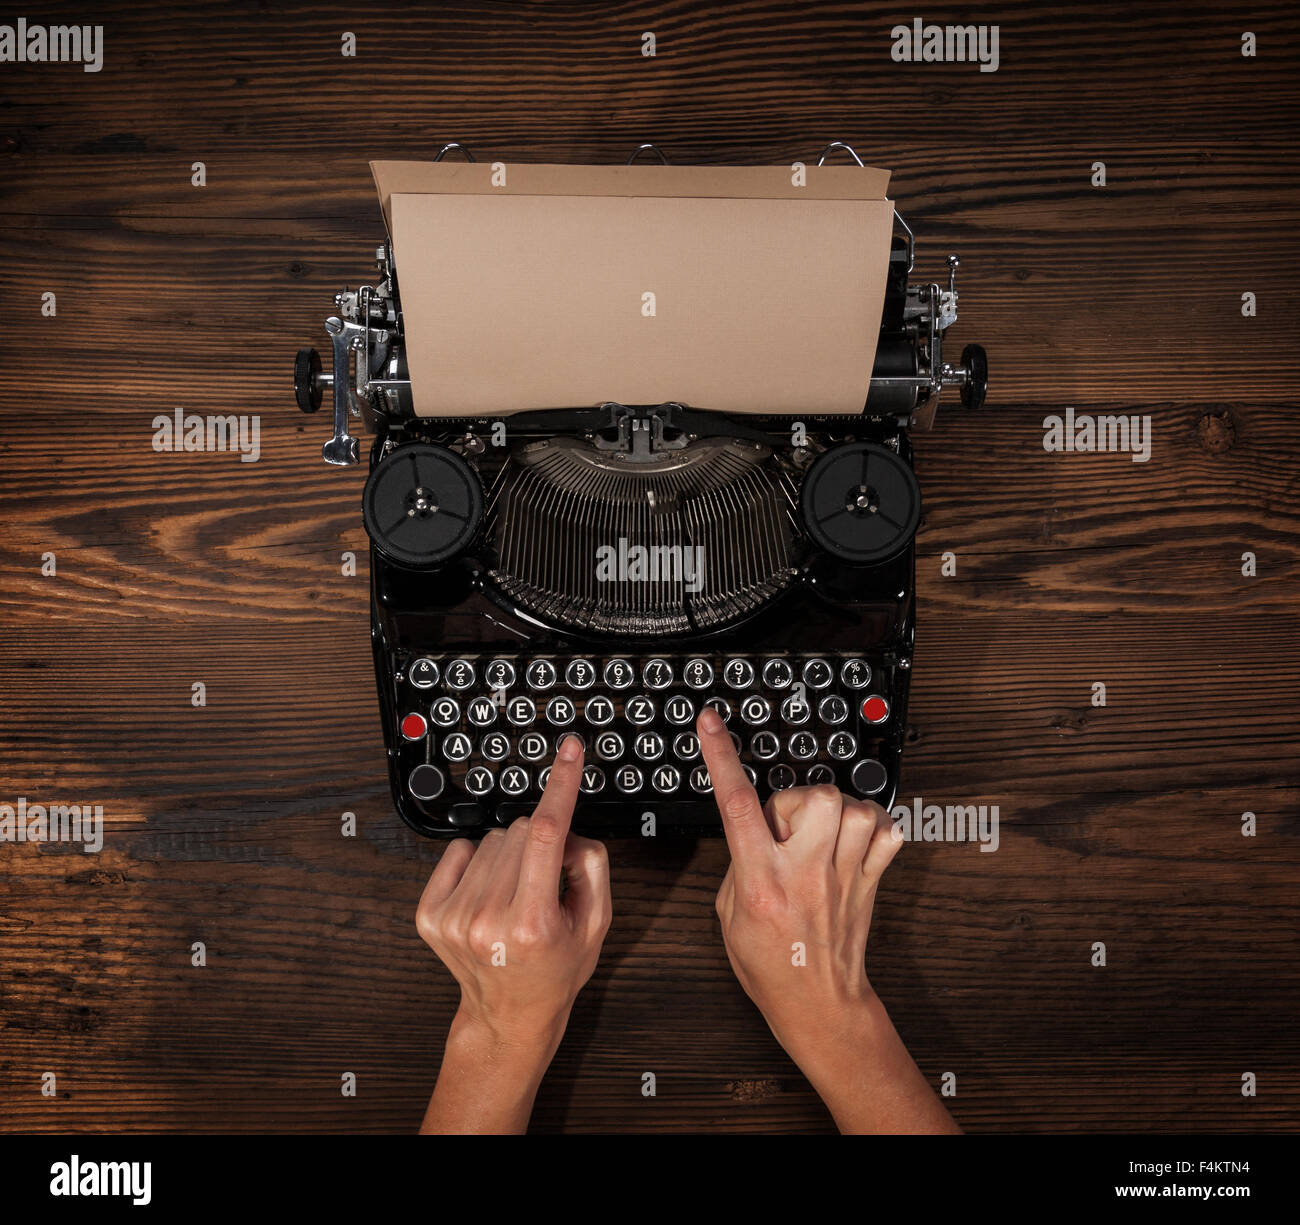 Woman typing on an old typewriter Stock Photo